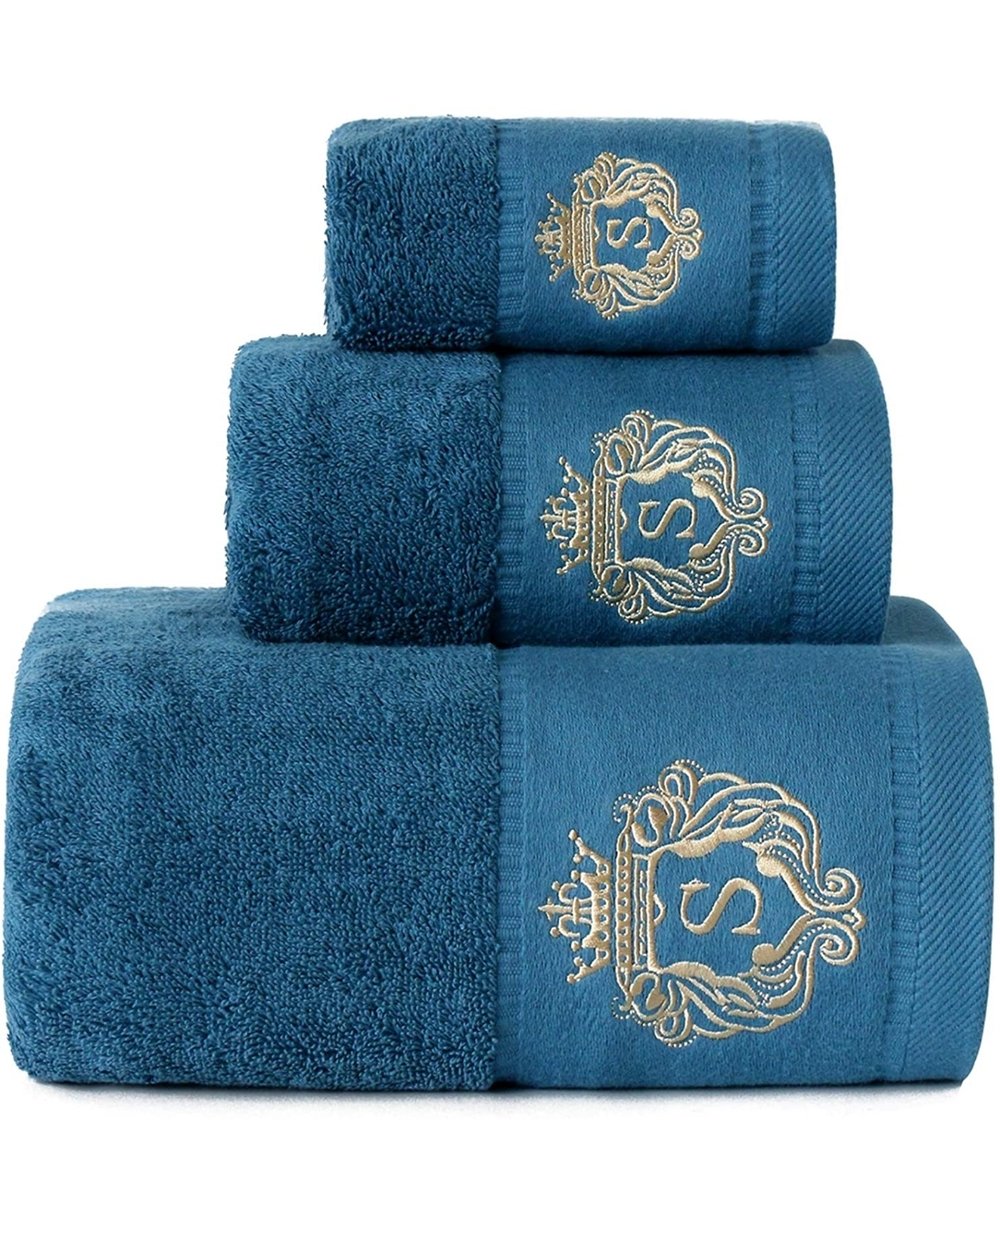 Royalty Luxury Towel set 3 Piece